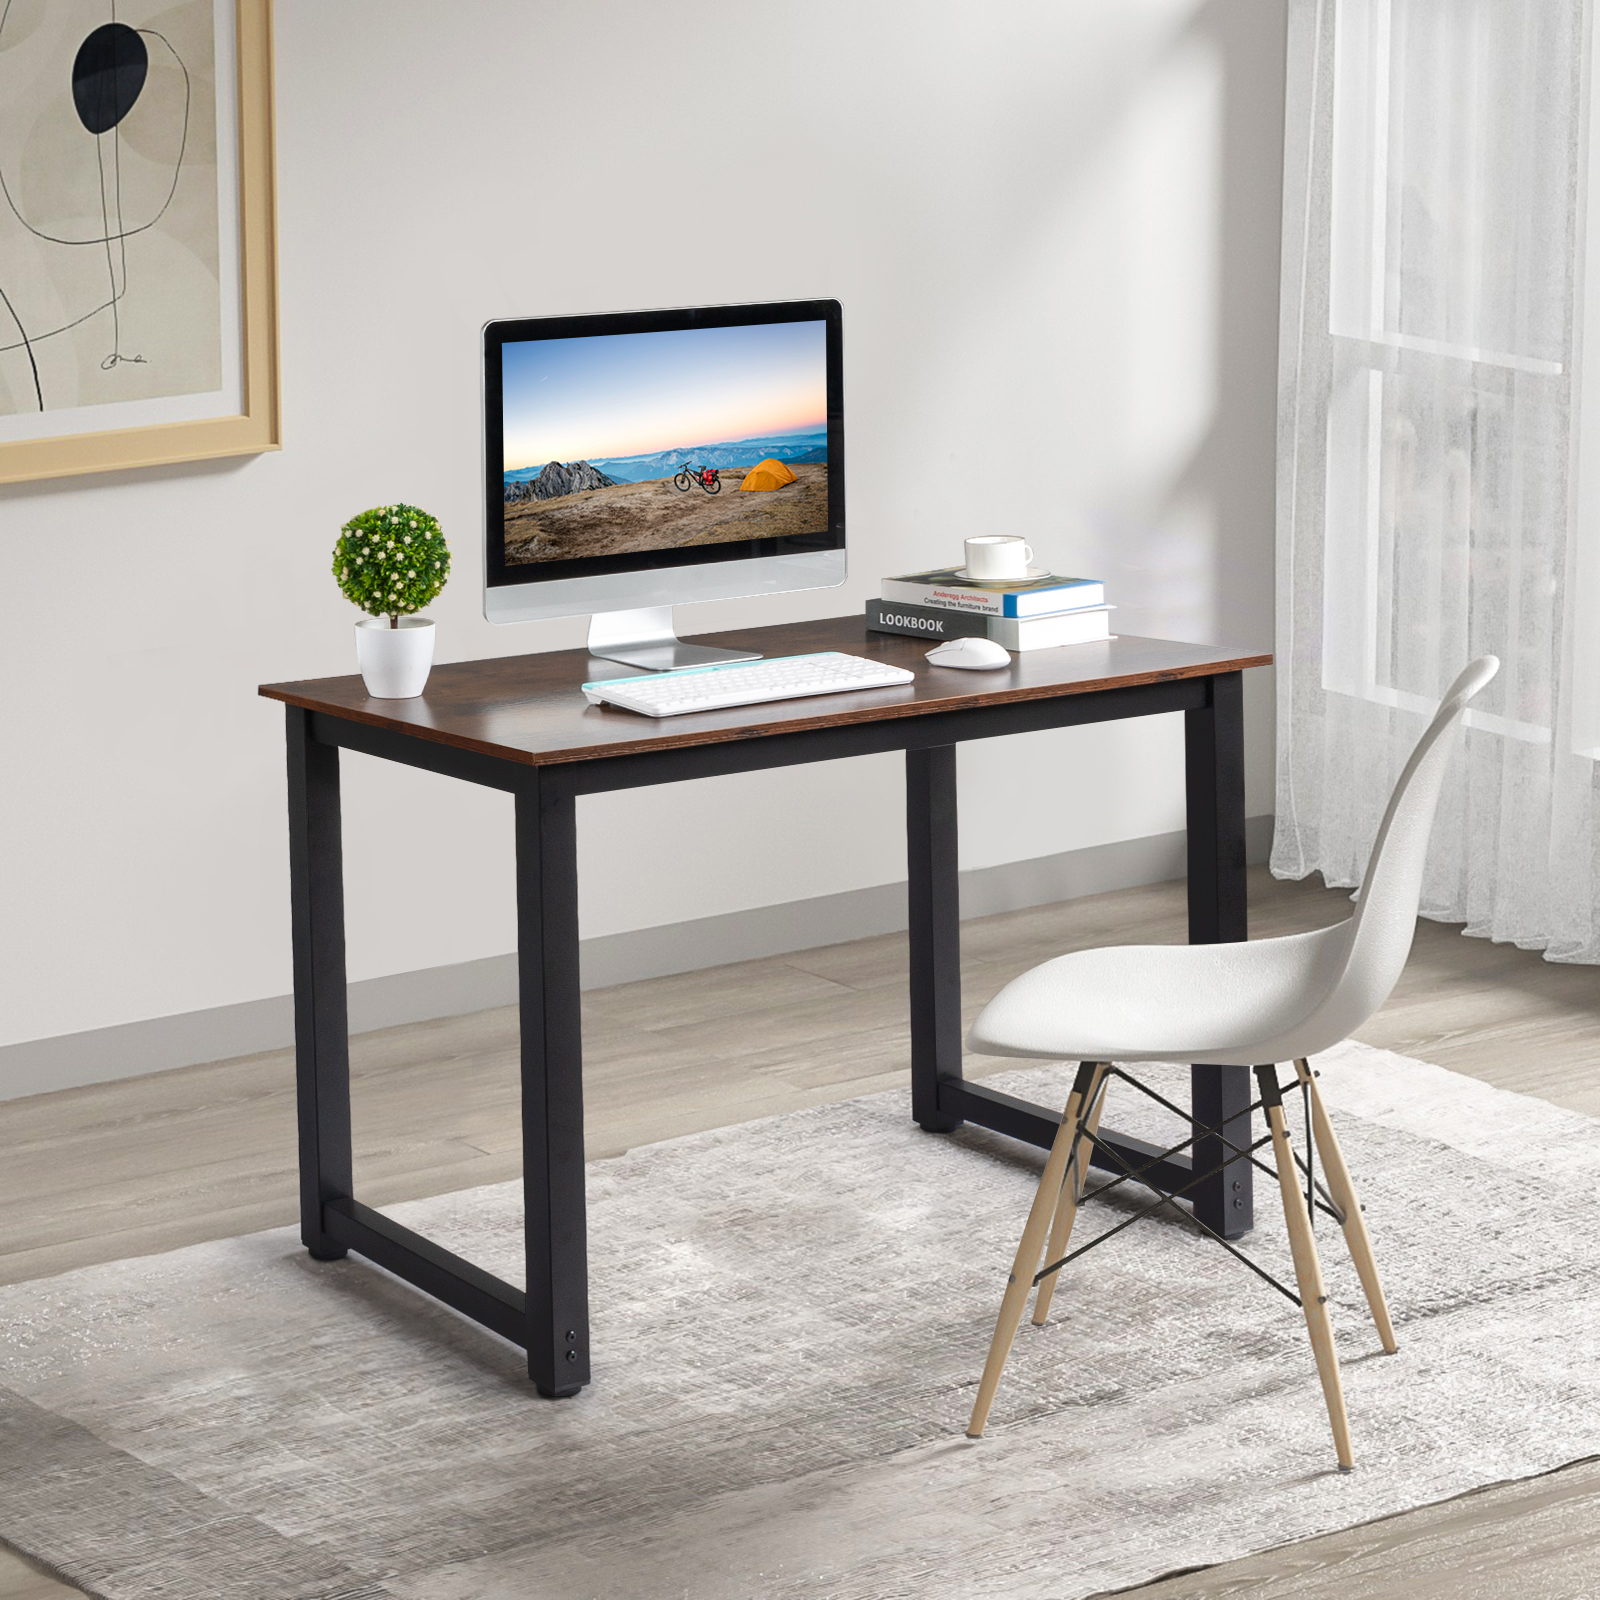 Ktaxon Wood Computer Desk PC Laptop Study Table Workstation Home Office Furniture - image 5 of 13